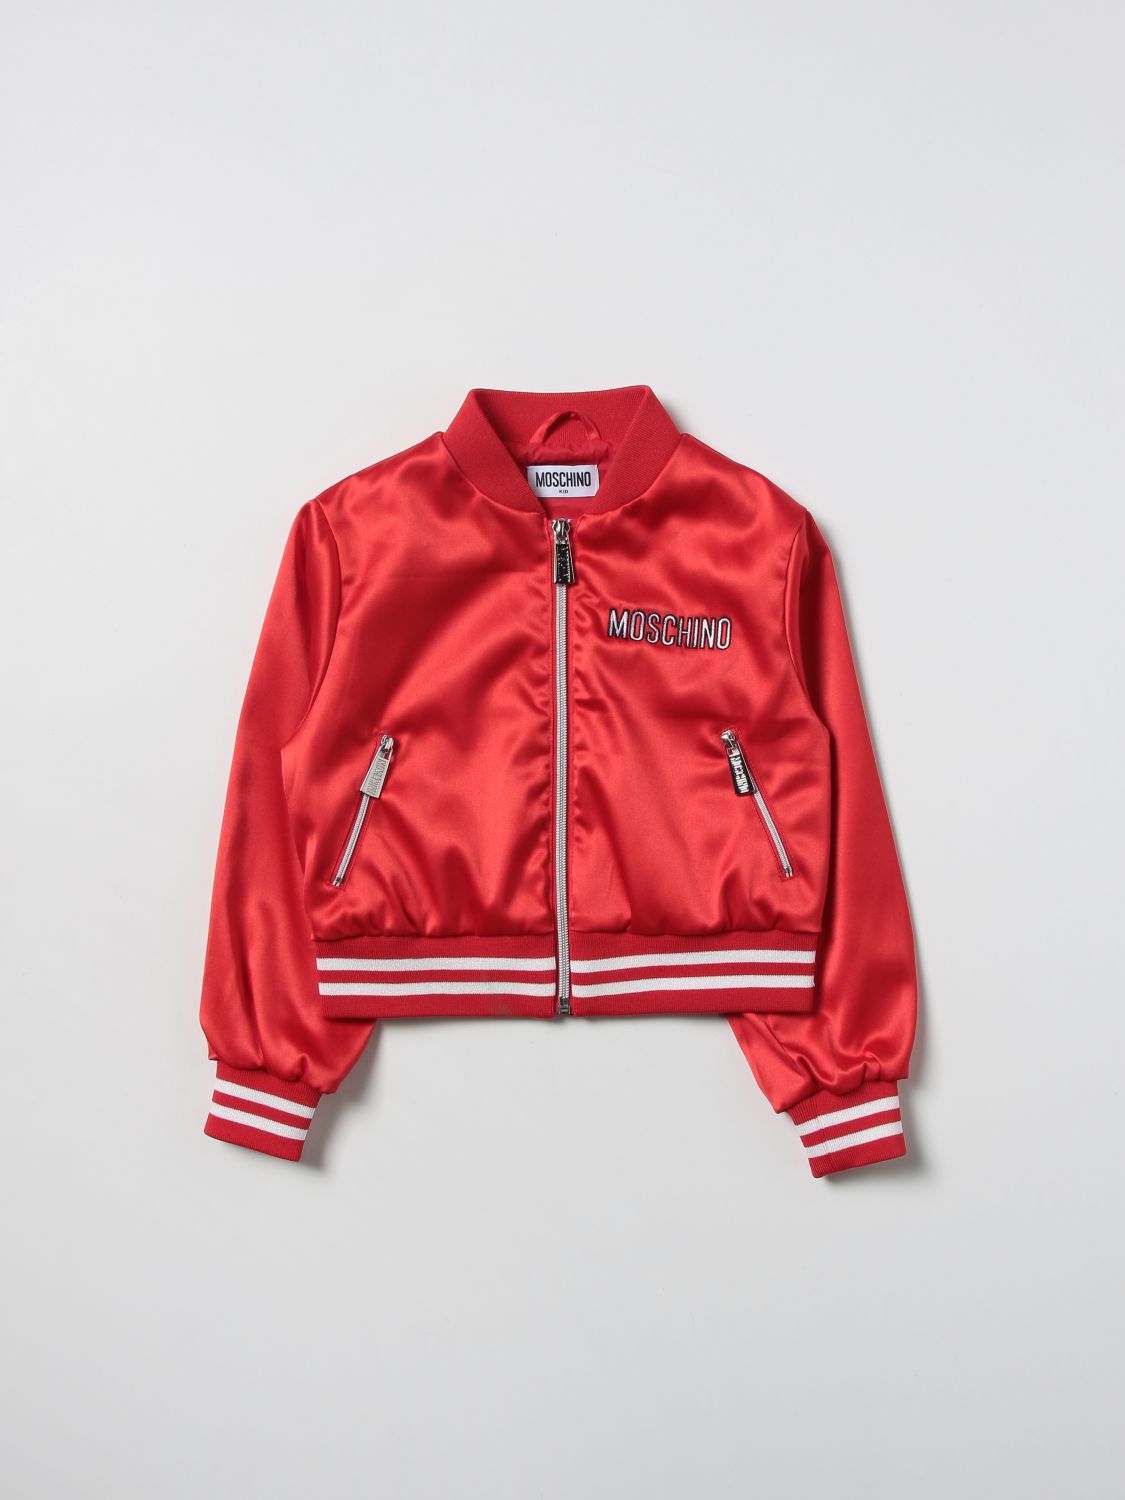 MOSCHINO KID: jacket - Red | Moschino Kid jacket HAS035LRA04 online on ...